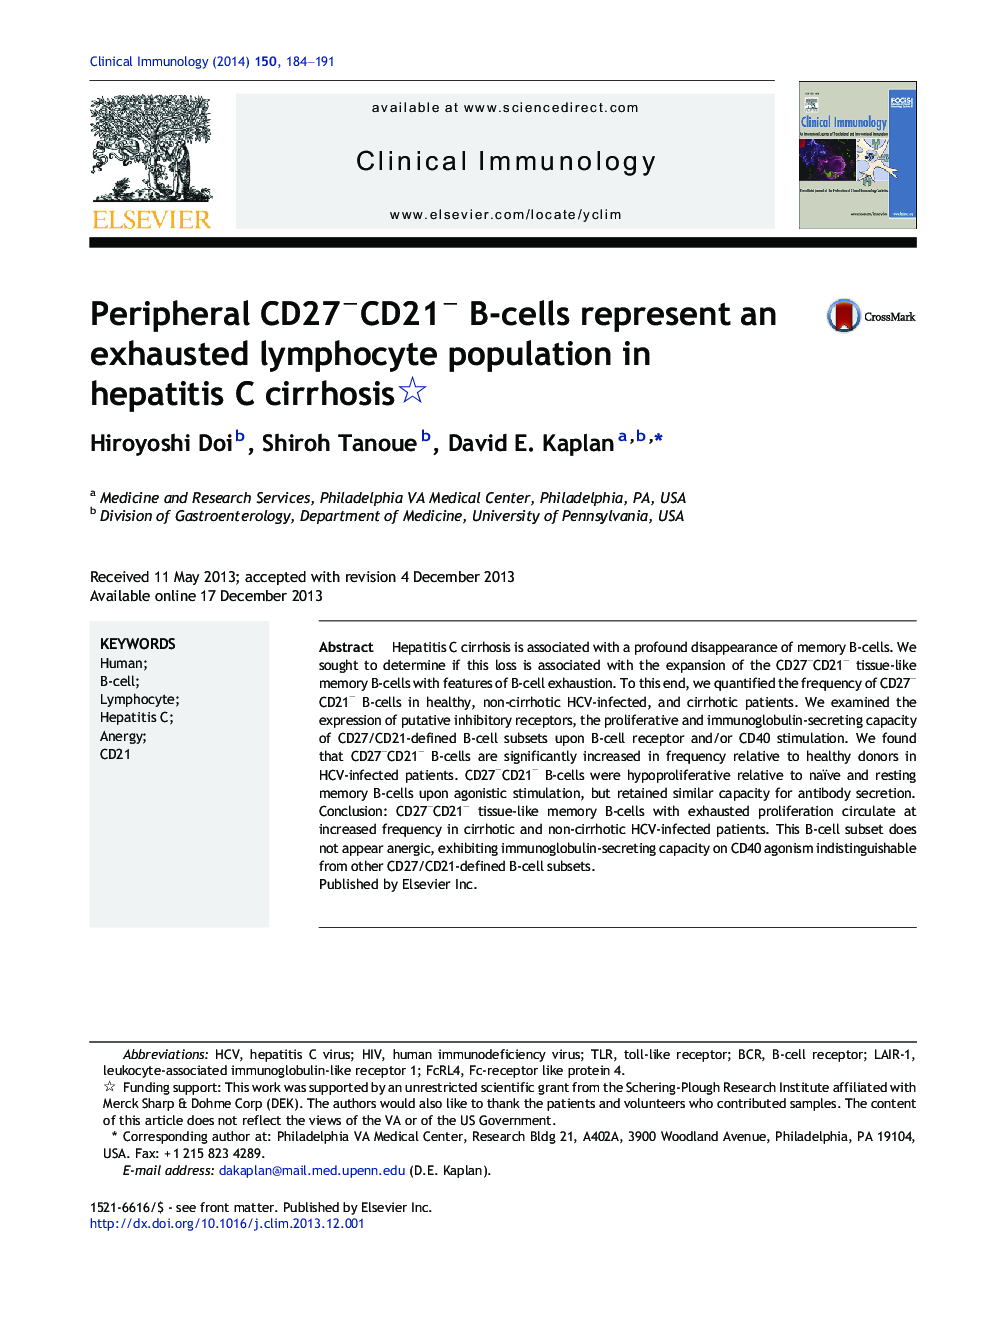 Peripheral CD27âCD21â B-cells represent an exhausted lymphocyte population in hepatitis C cirrhosis